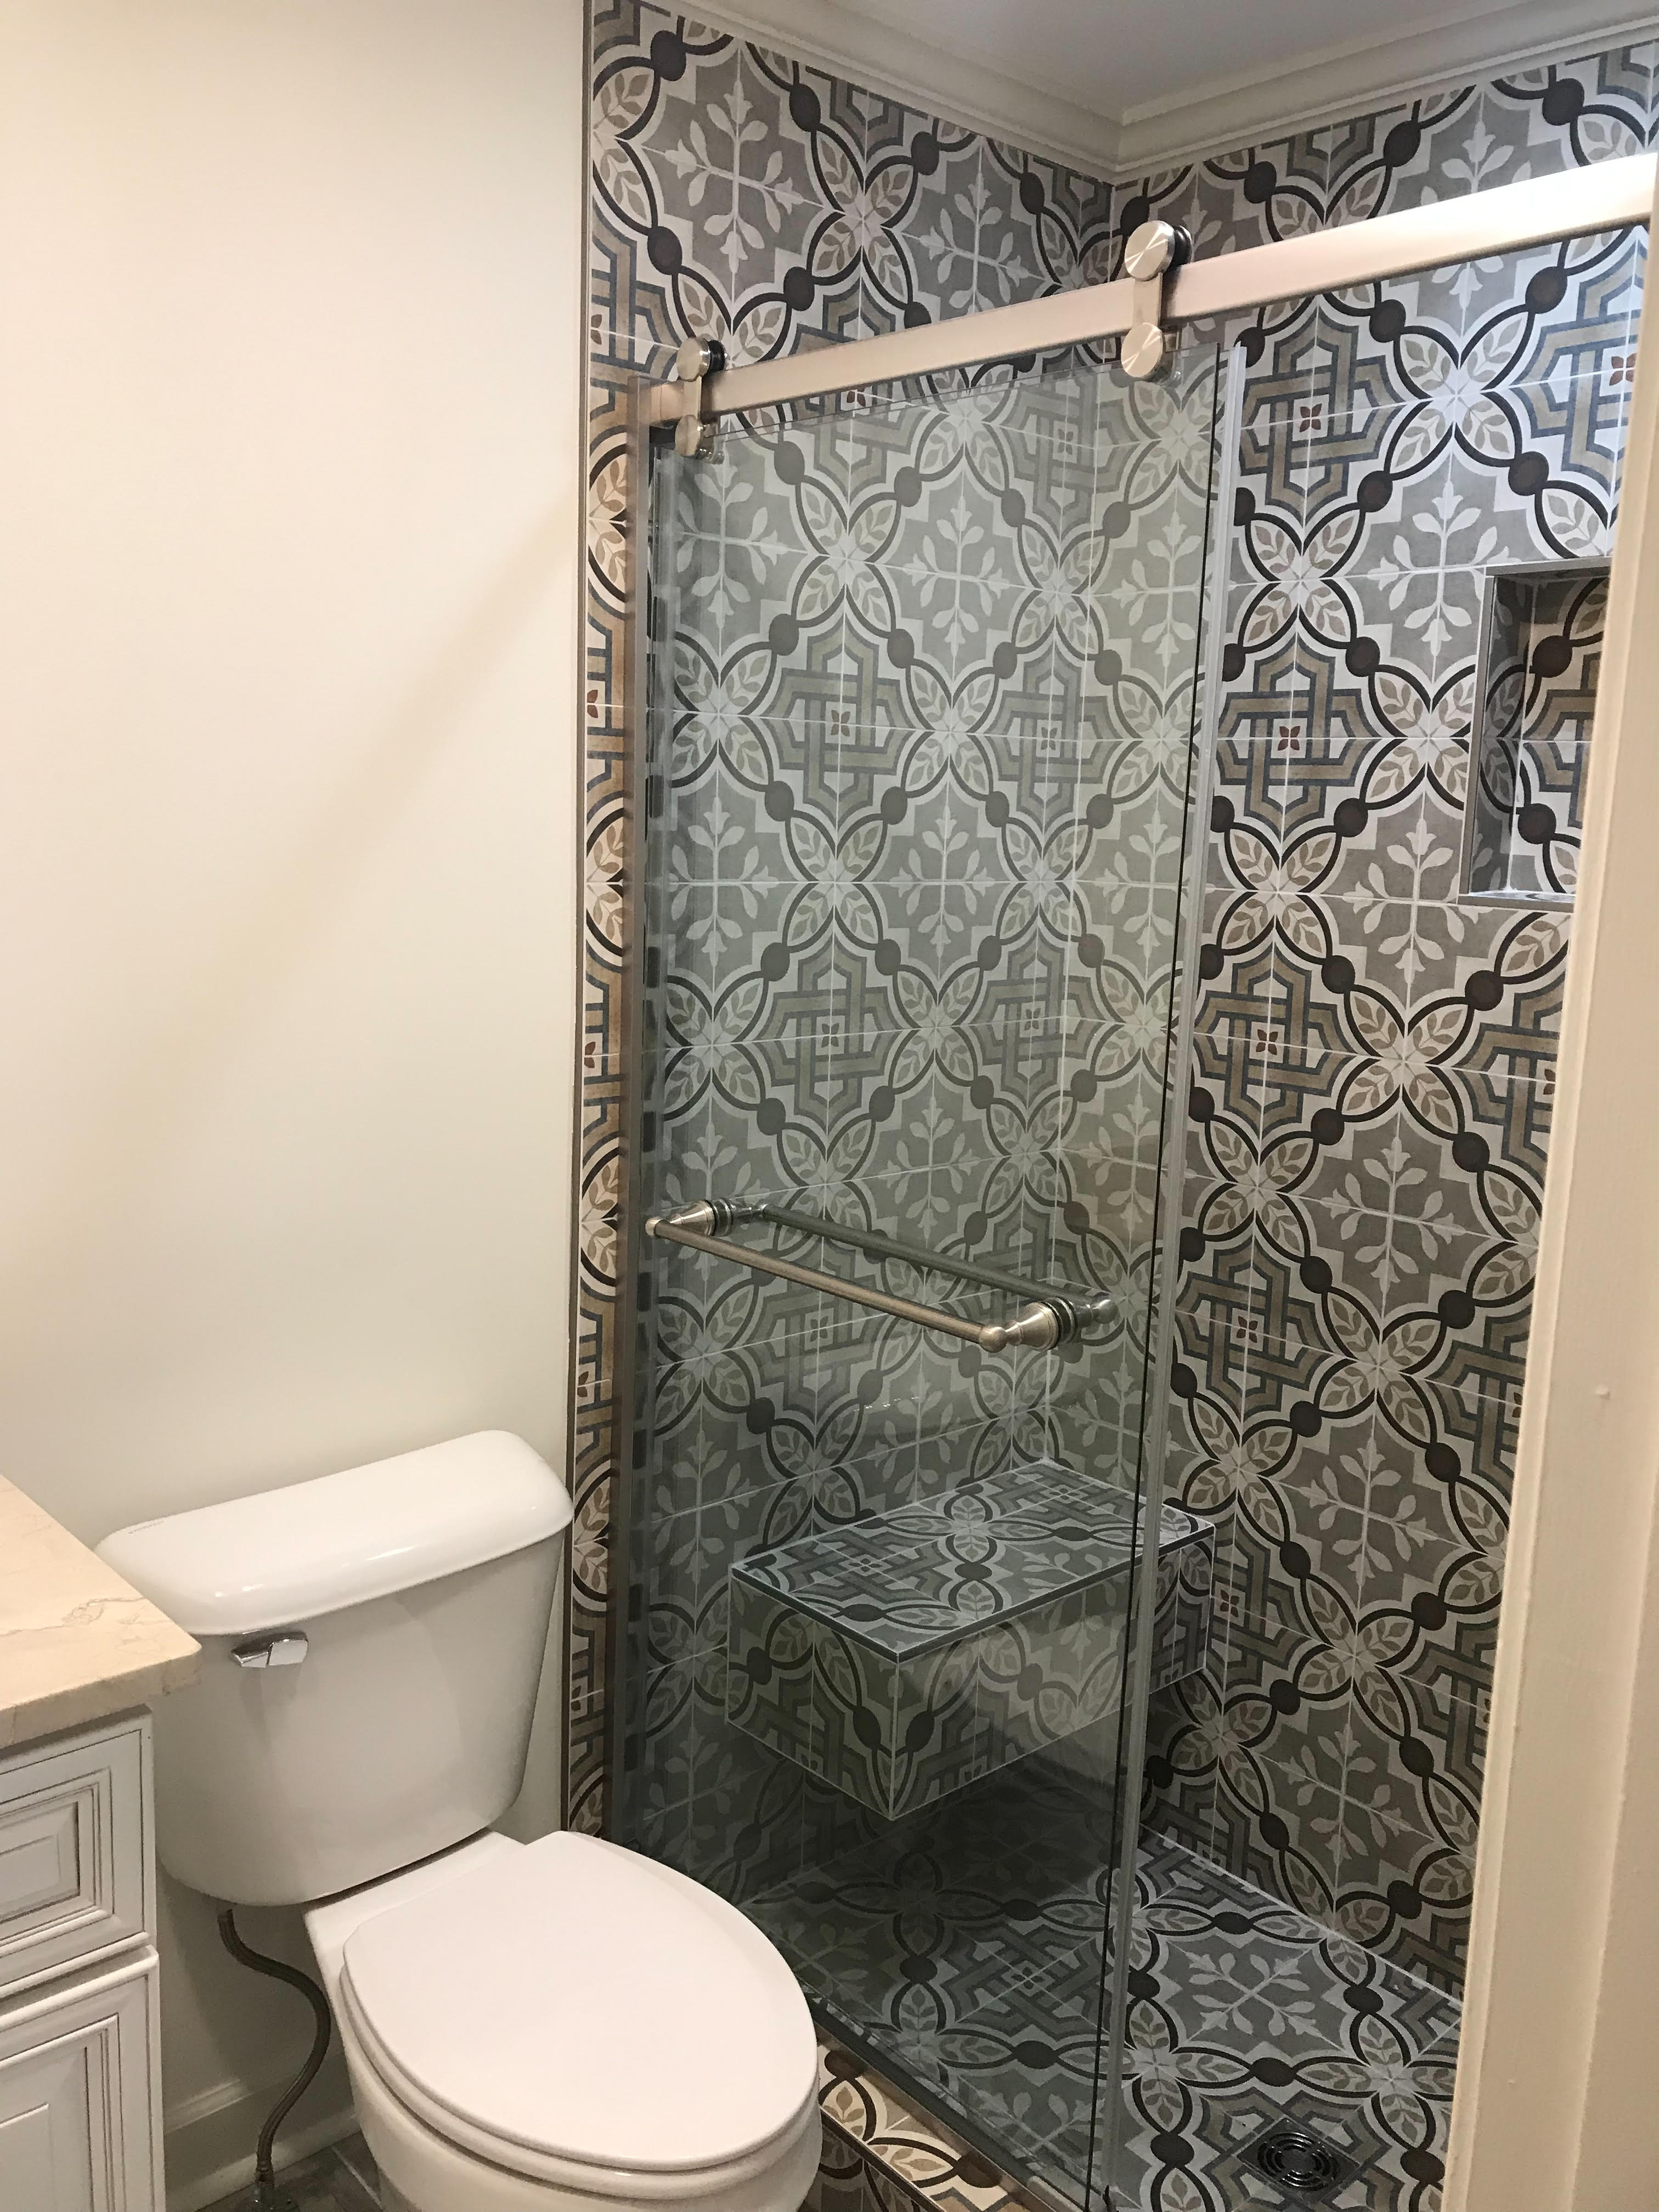 Another amazing custom tile design for shower